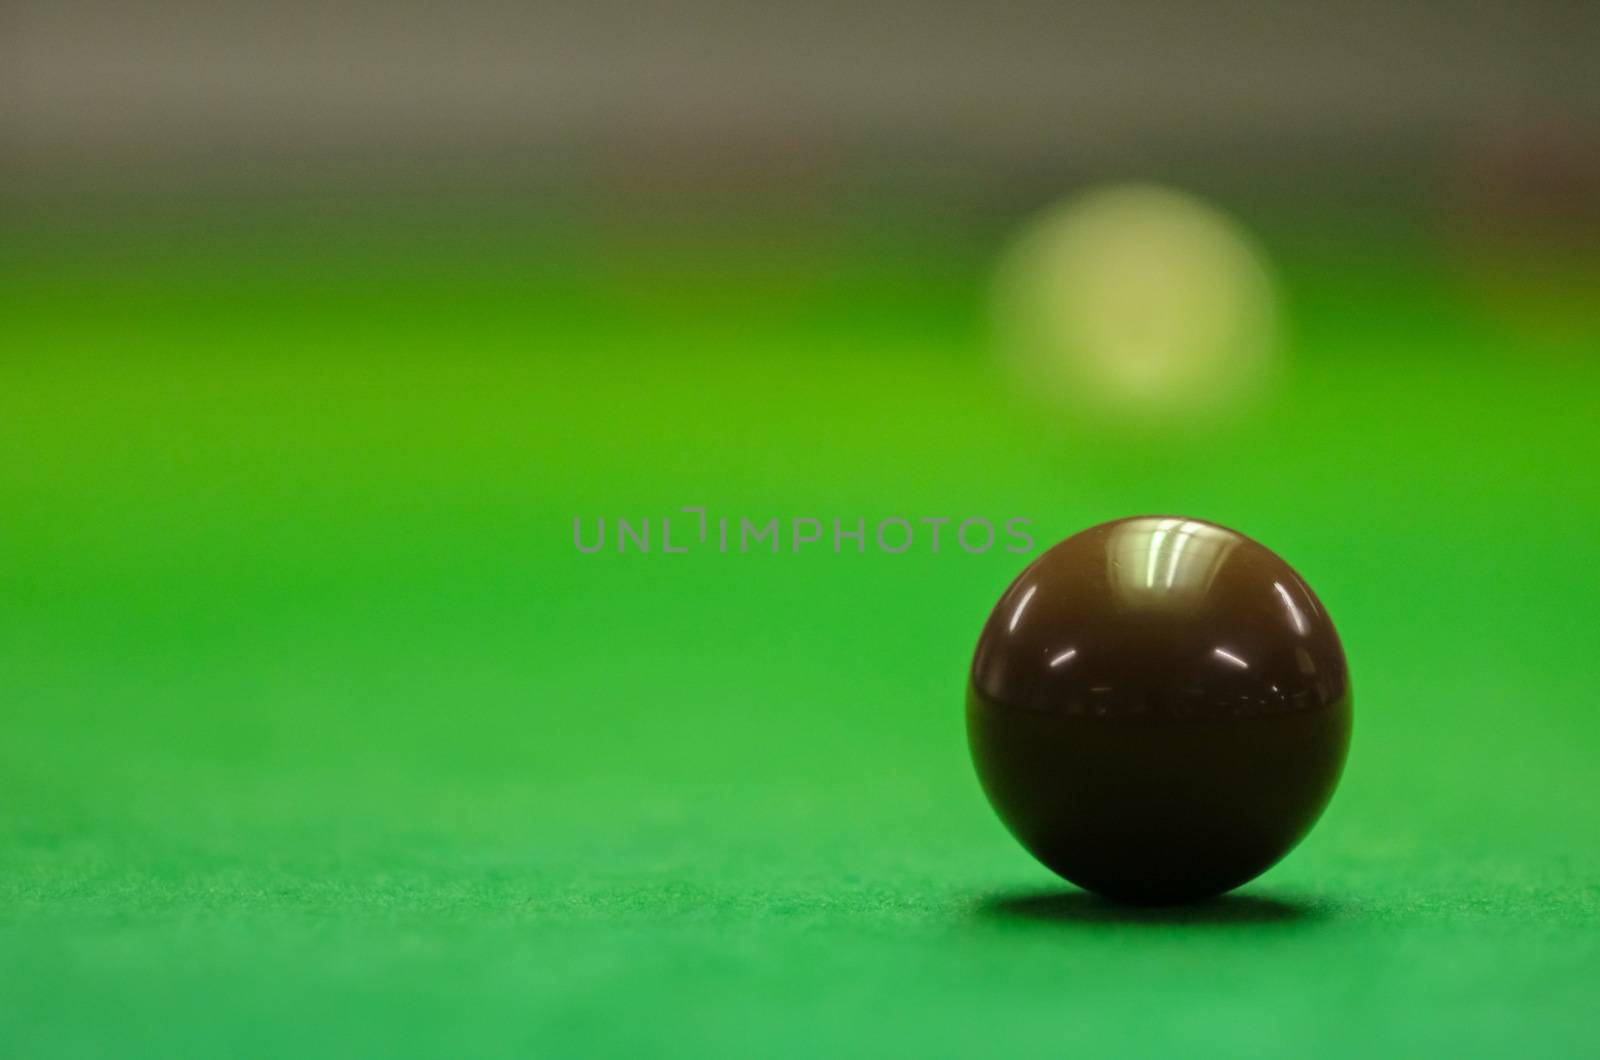 snooker balls on green snooker table